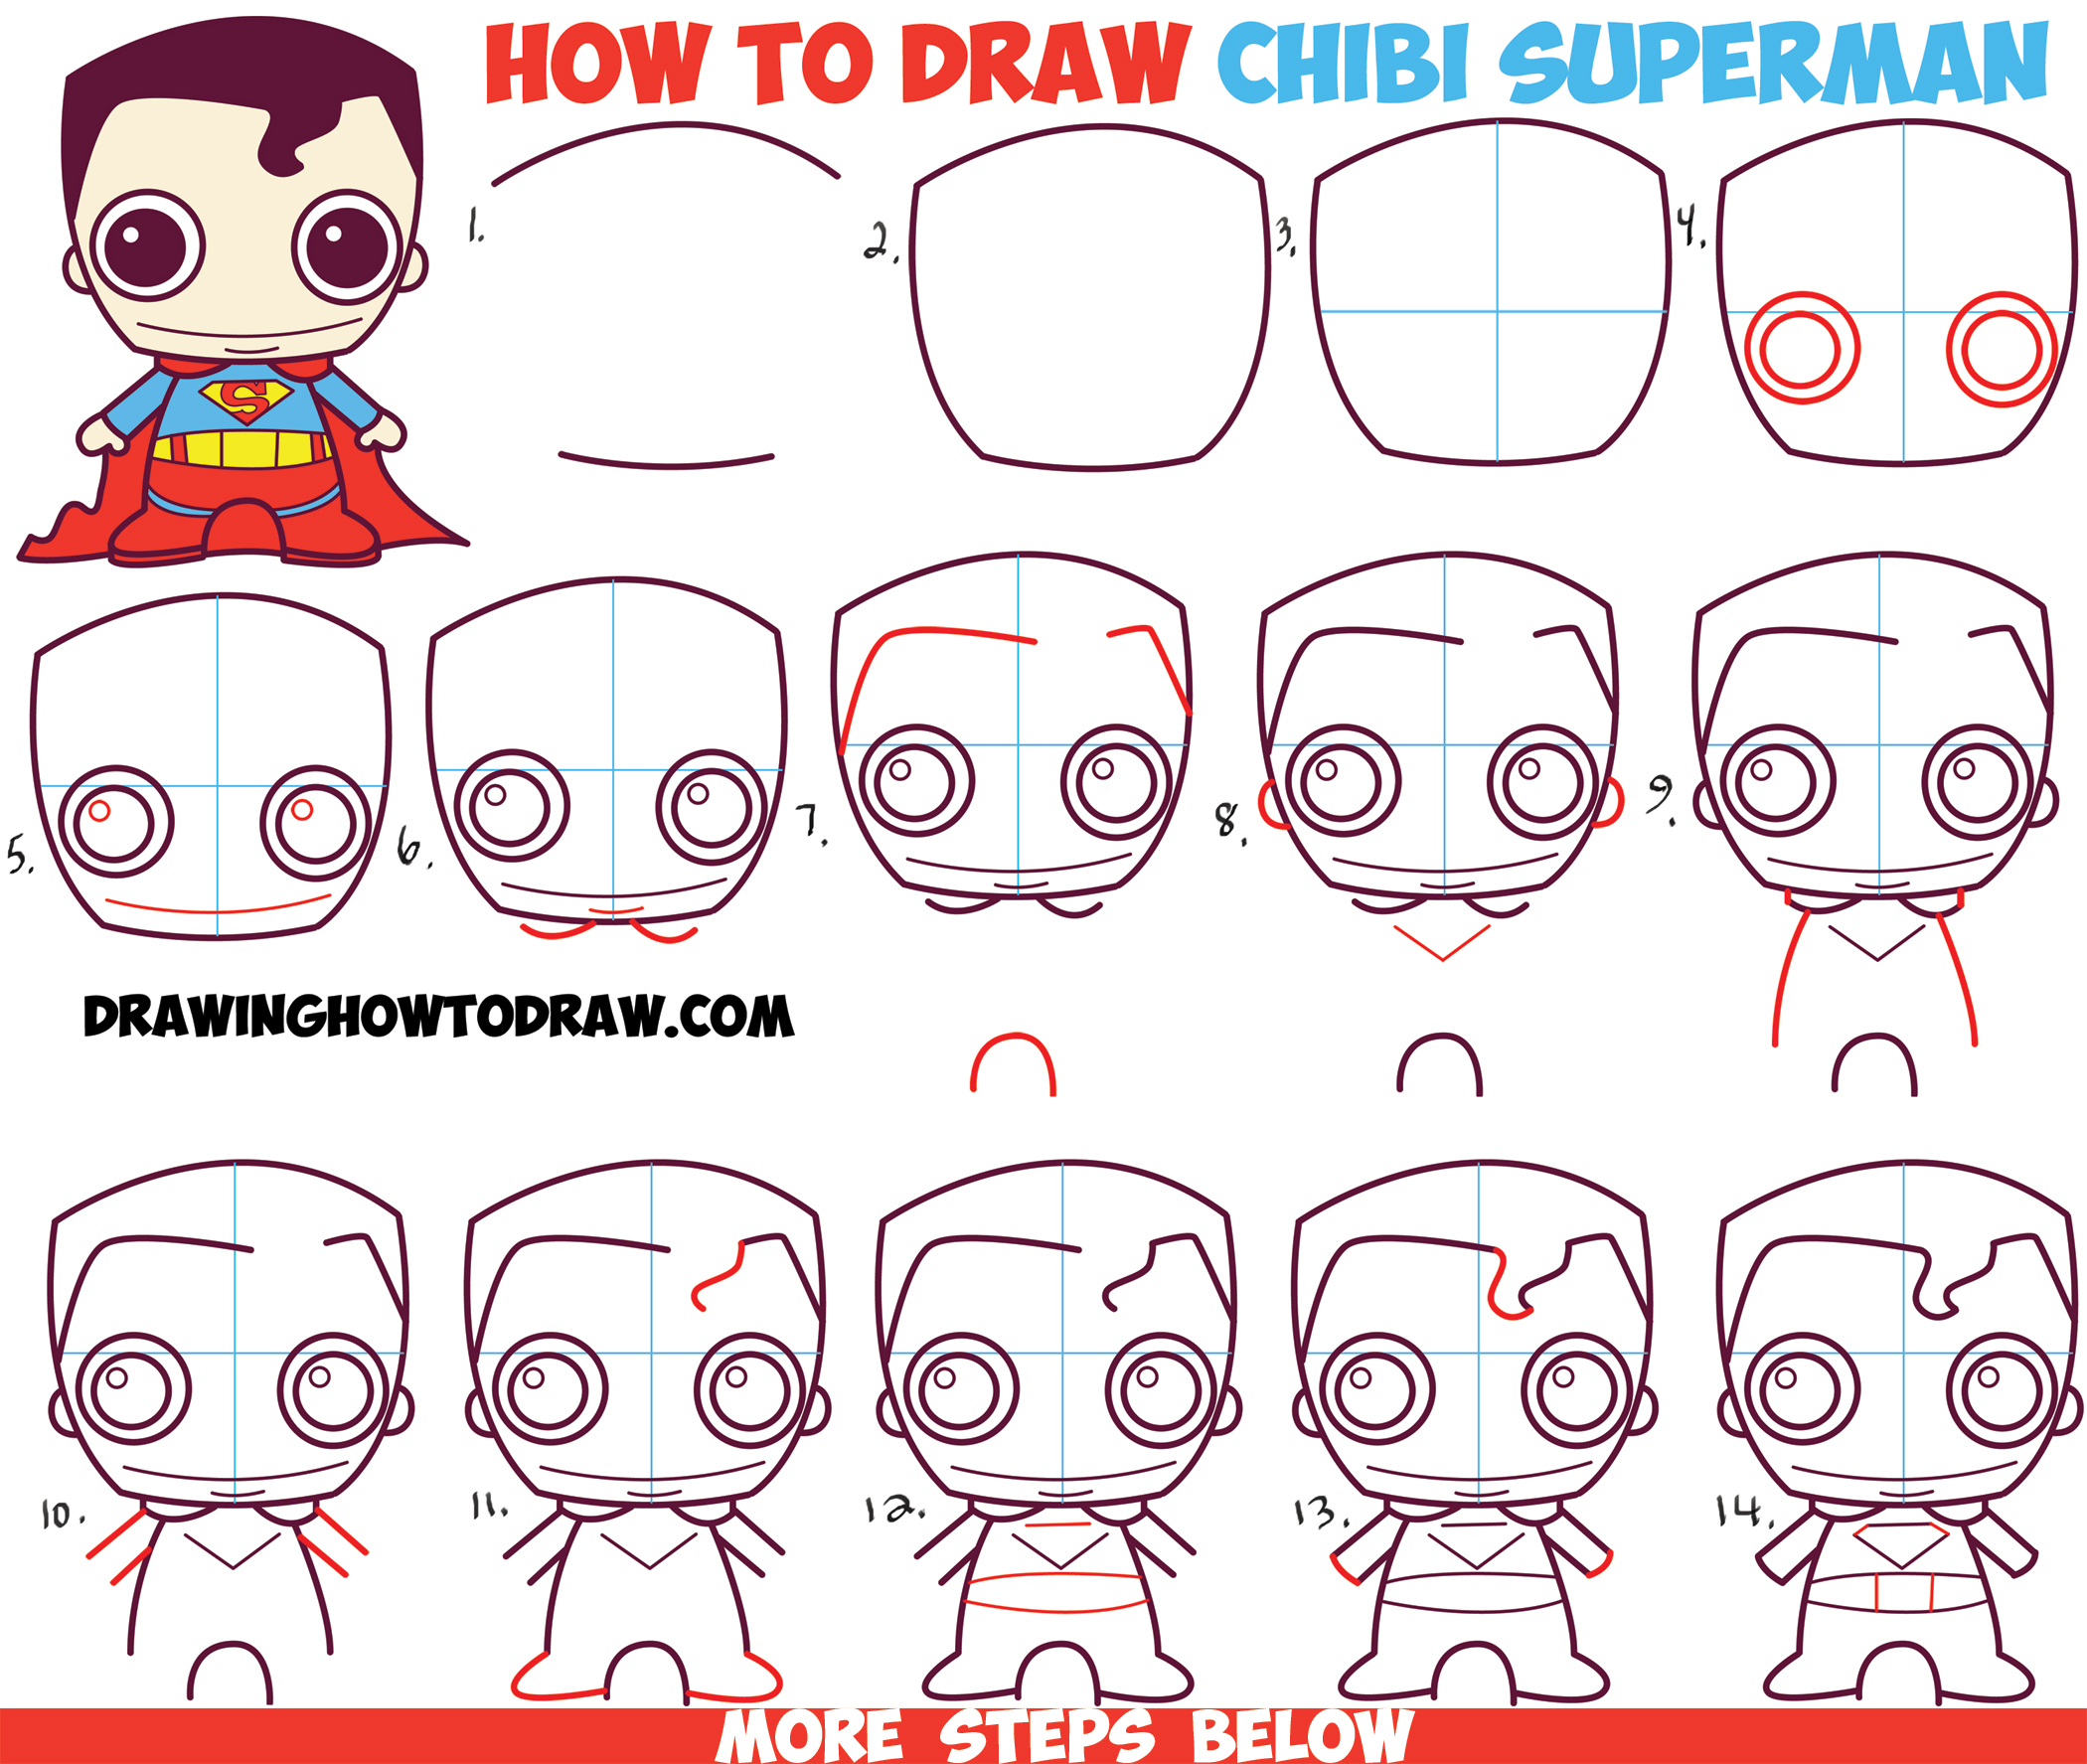 How To Draw a Cute Cartoon Superman - EASY Chibi - Step By Step - Kawaii -  YouTube